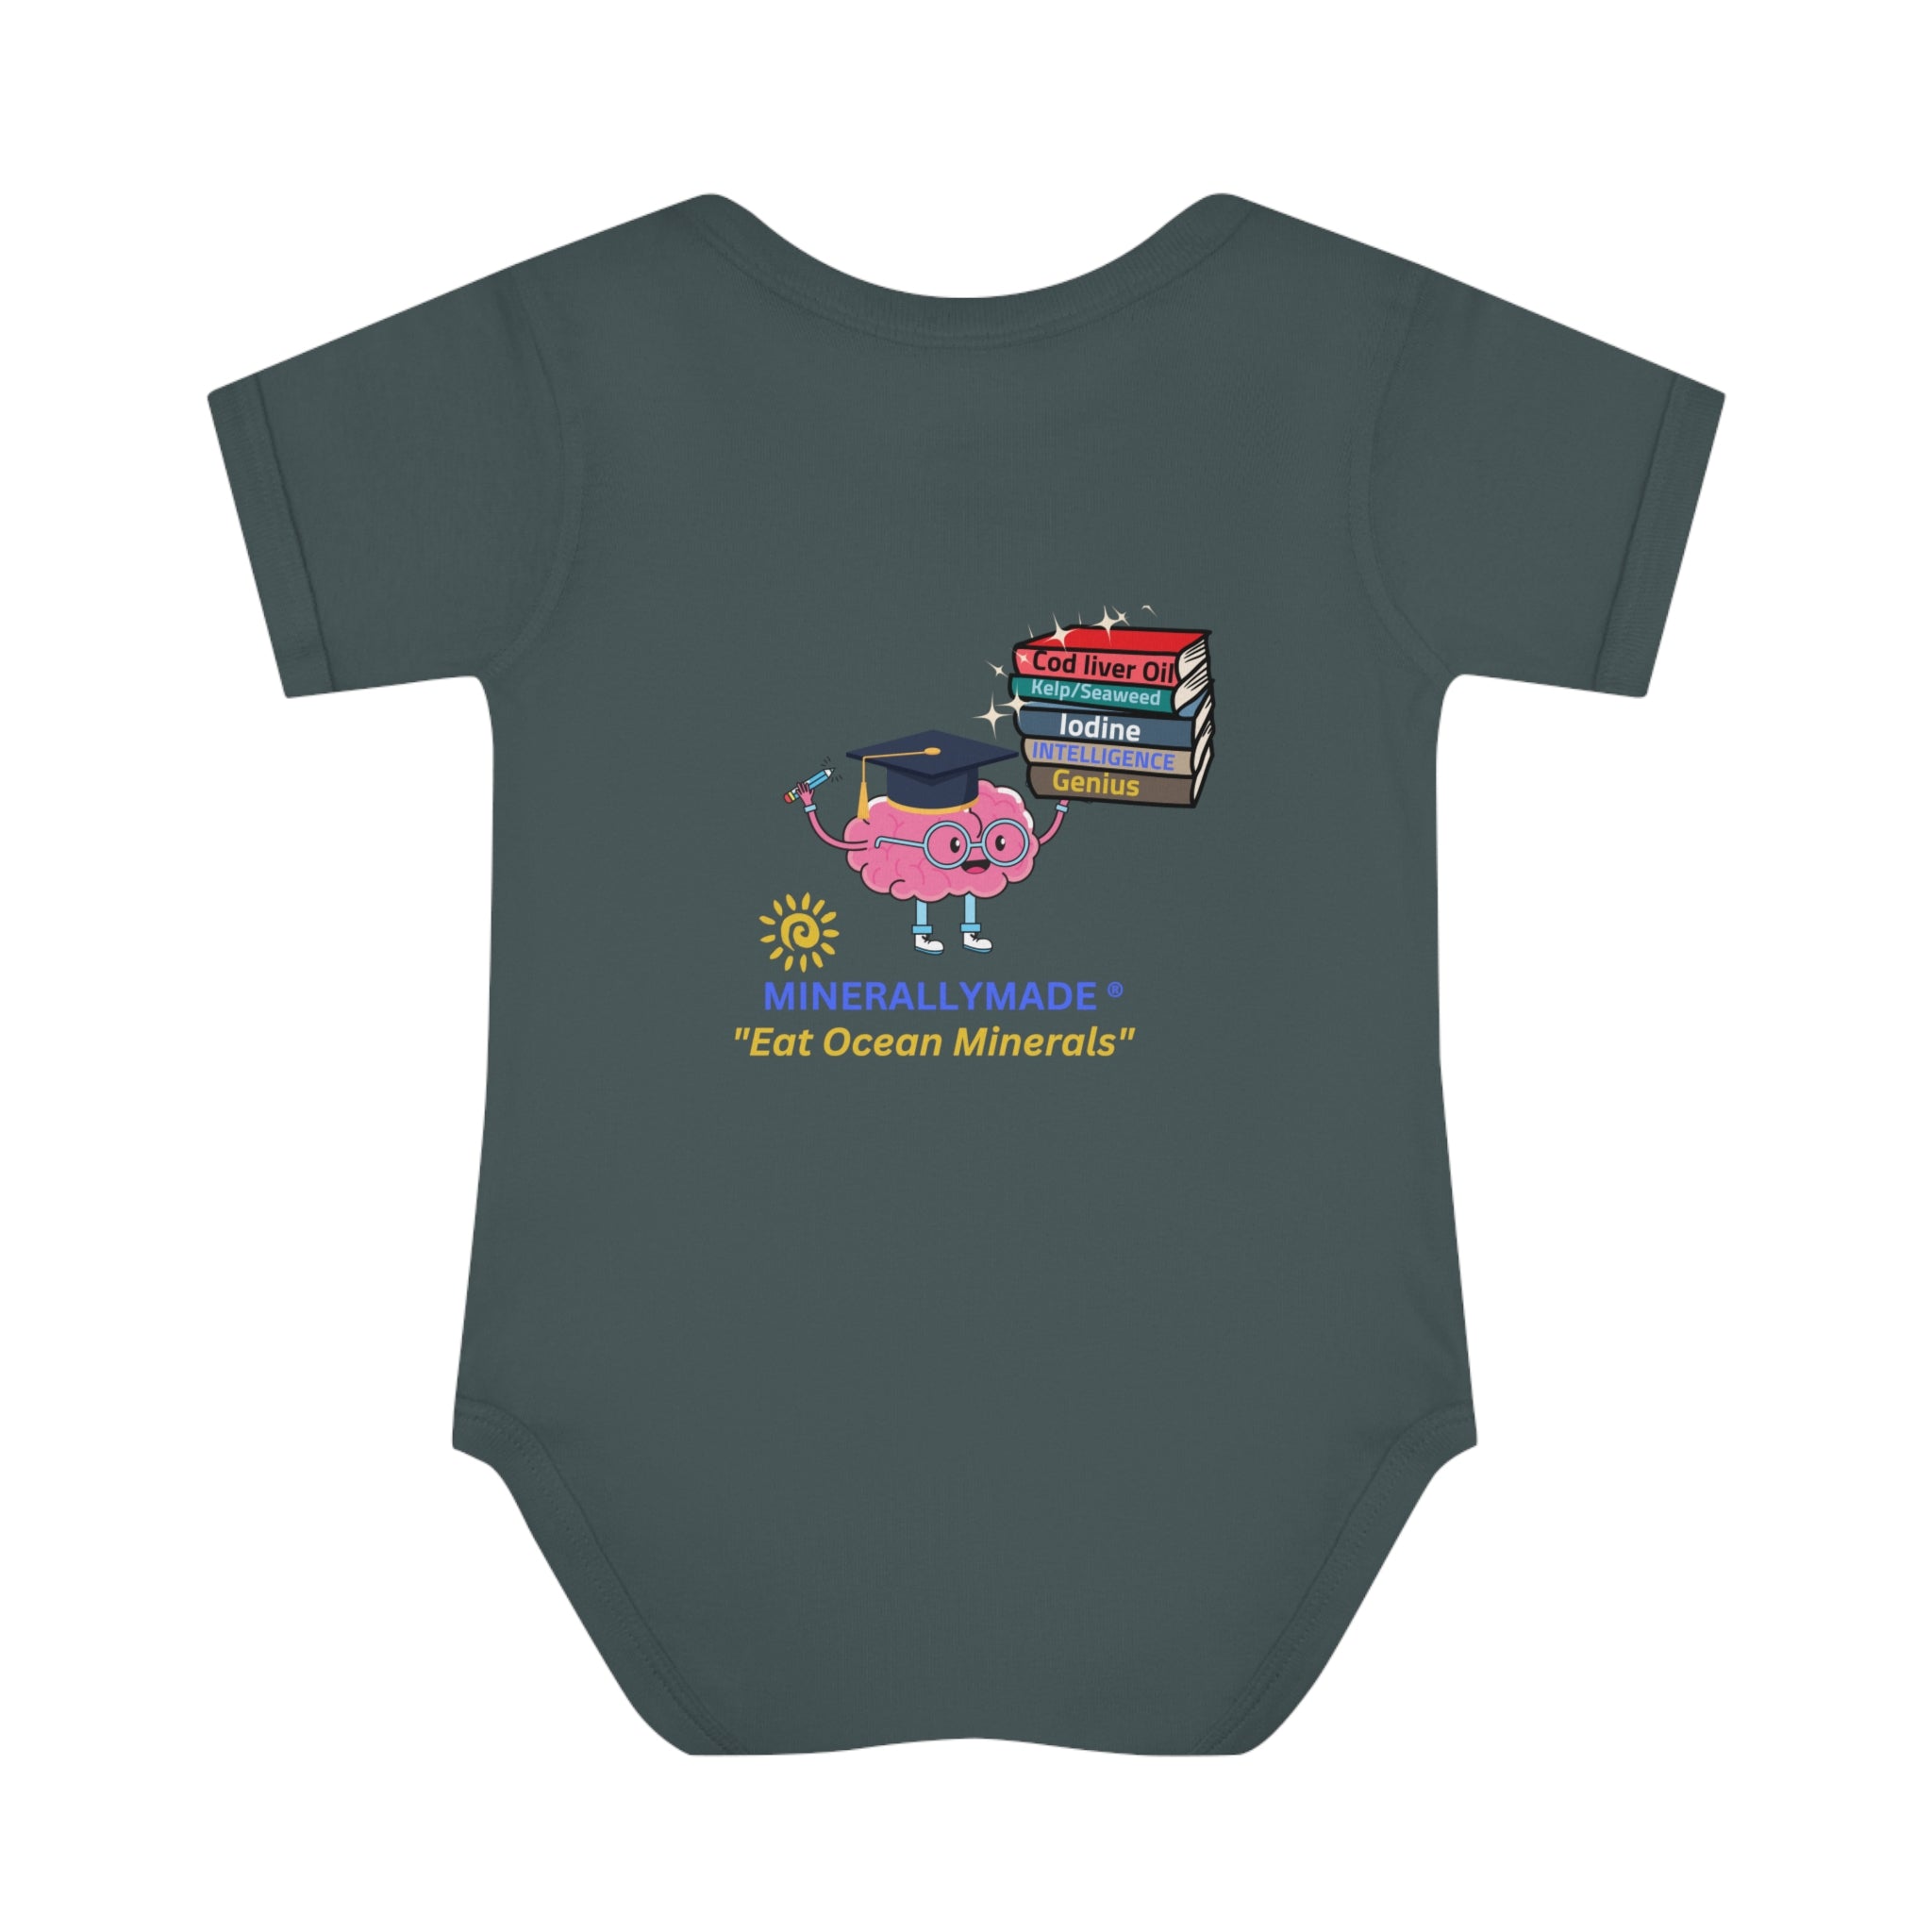 Minerallymade | Nourishing IQs Naturally | Infant Baby Rib Bodysuit